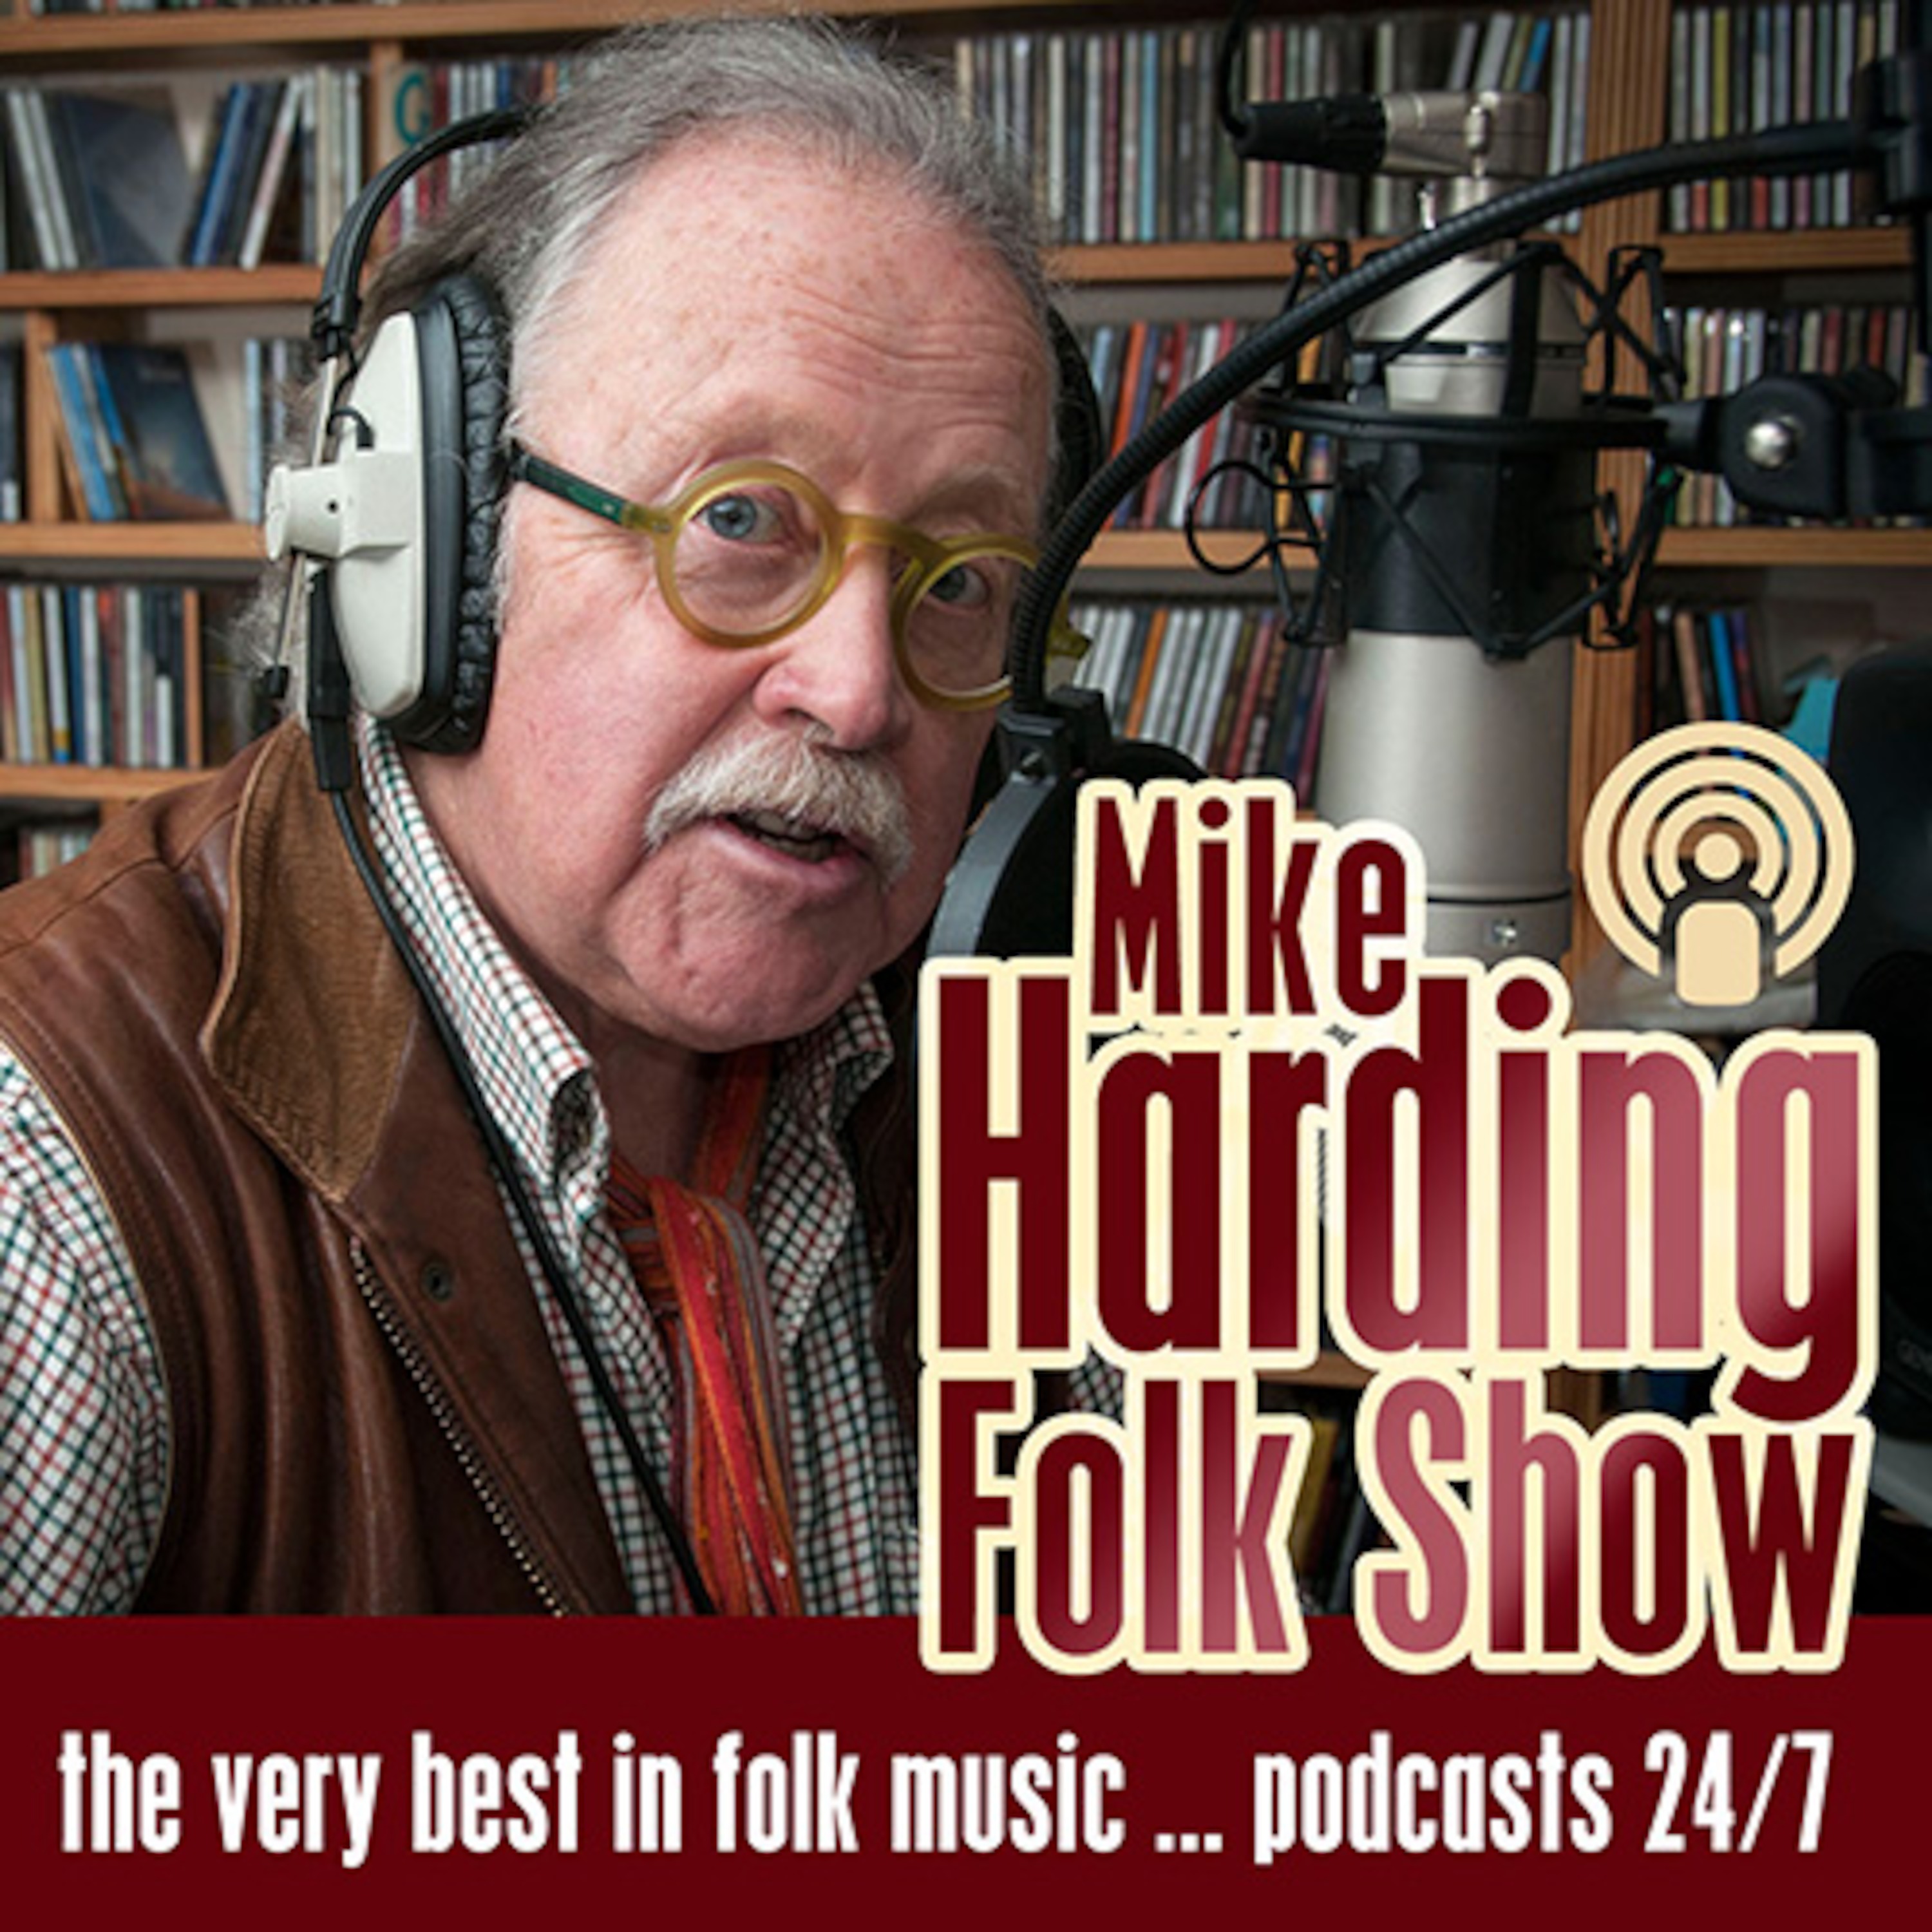 Mike Harding Folk Show 19